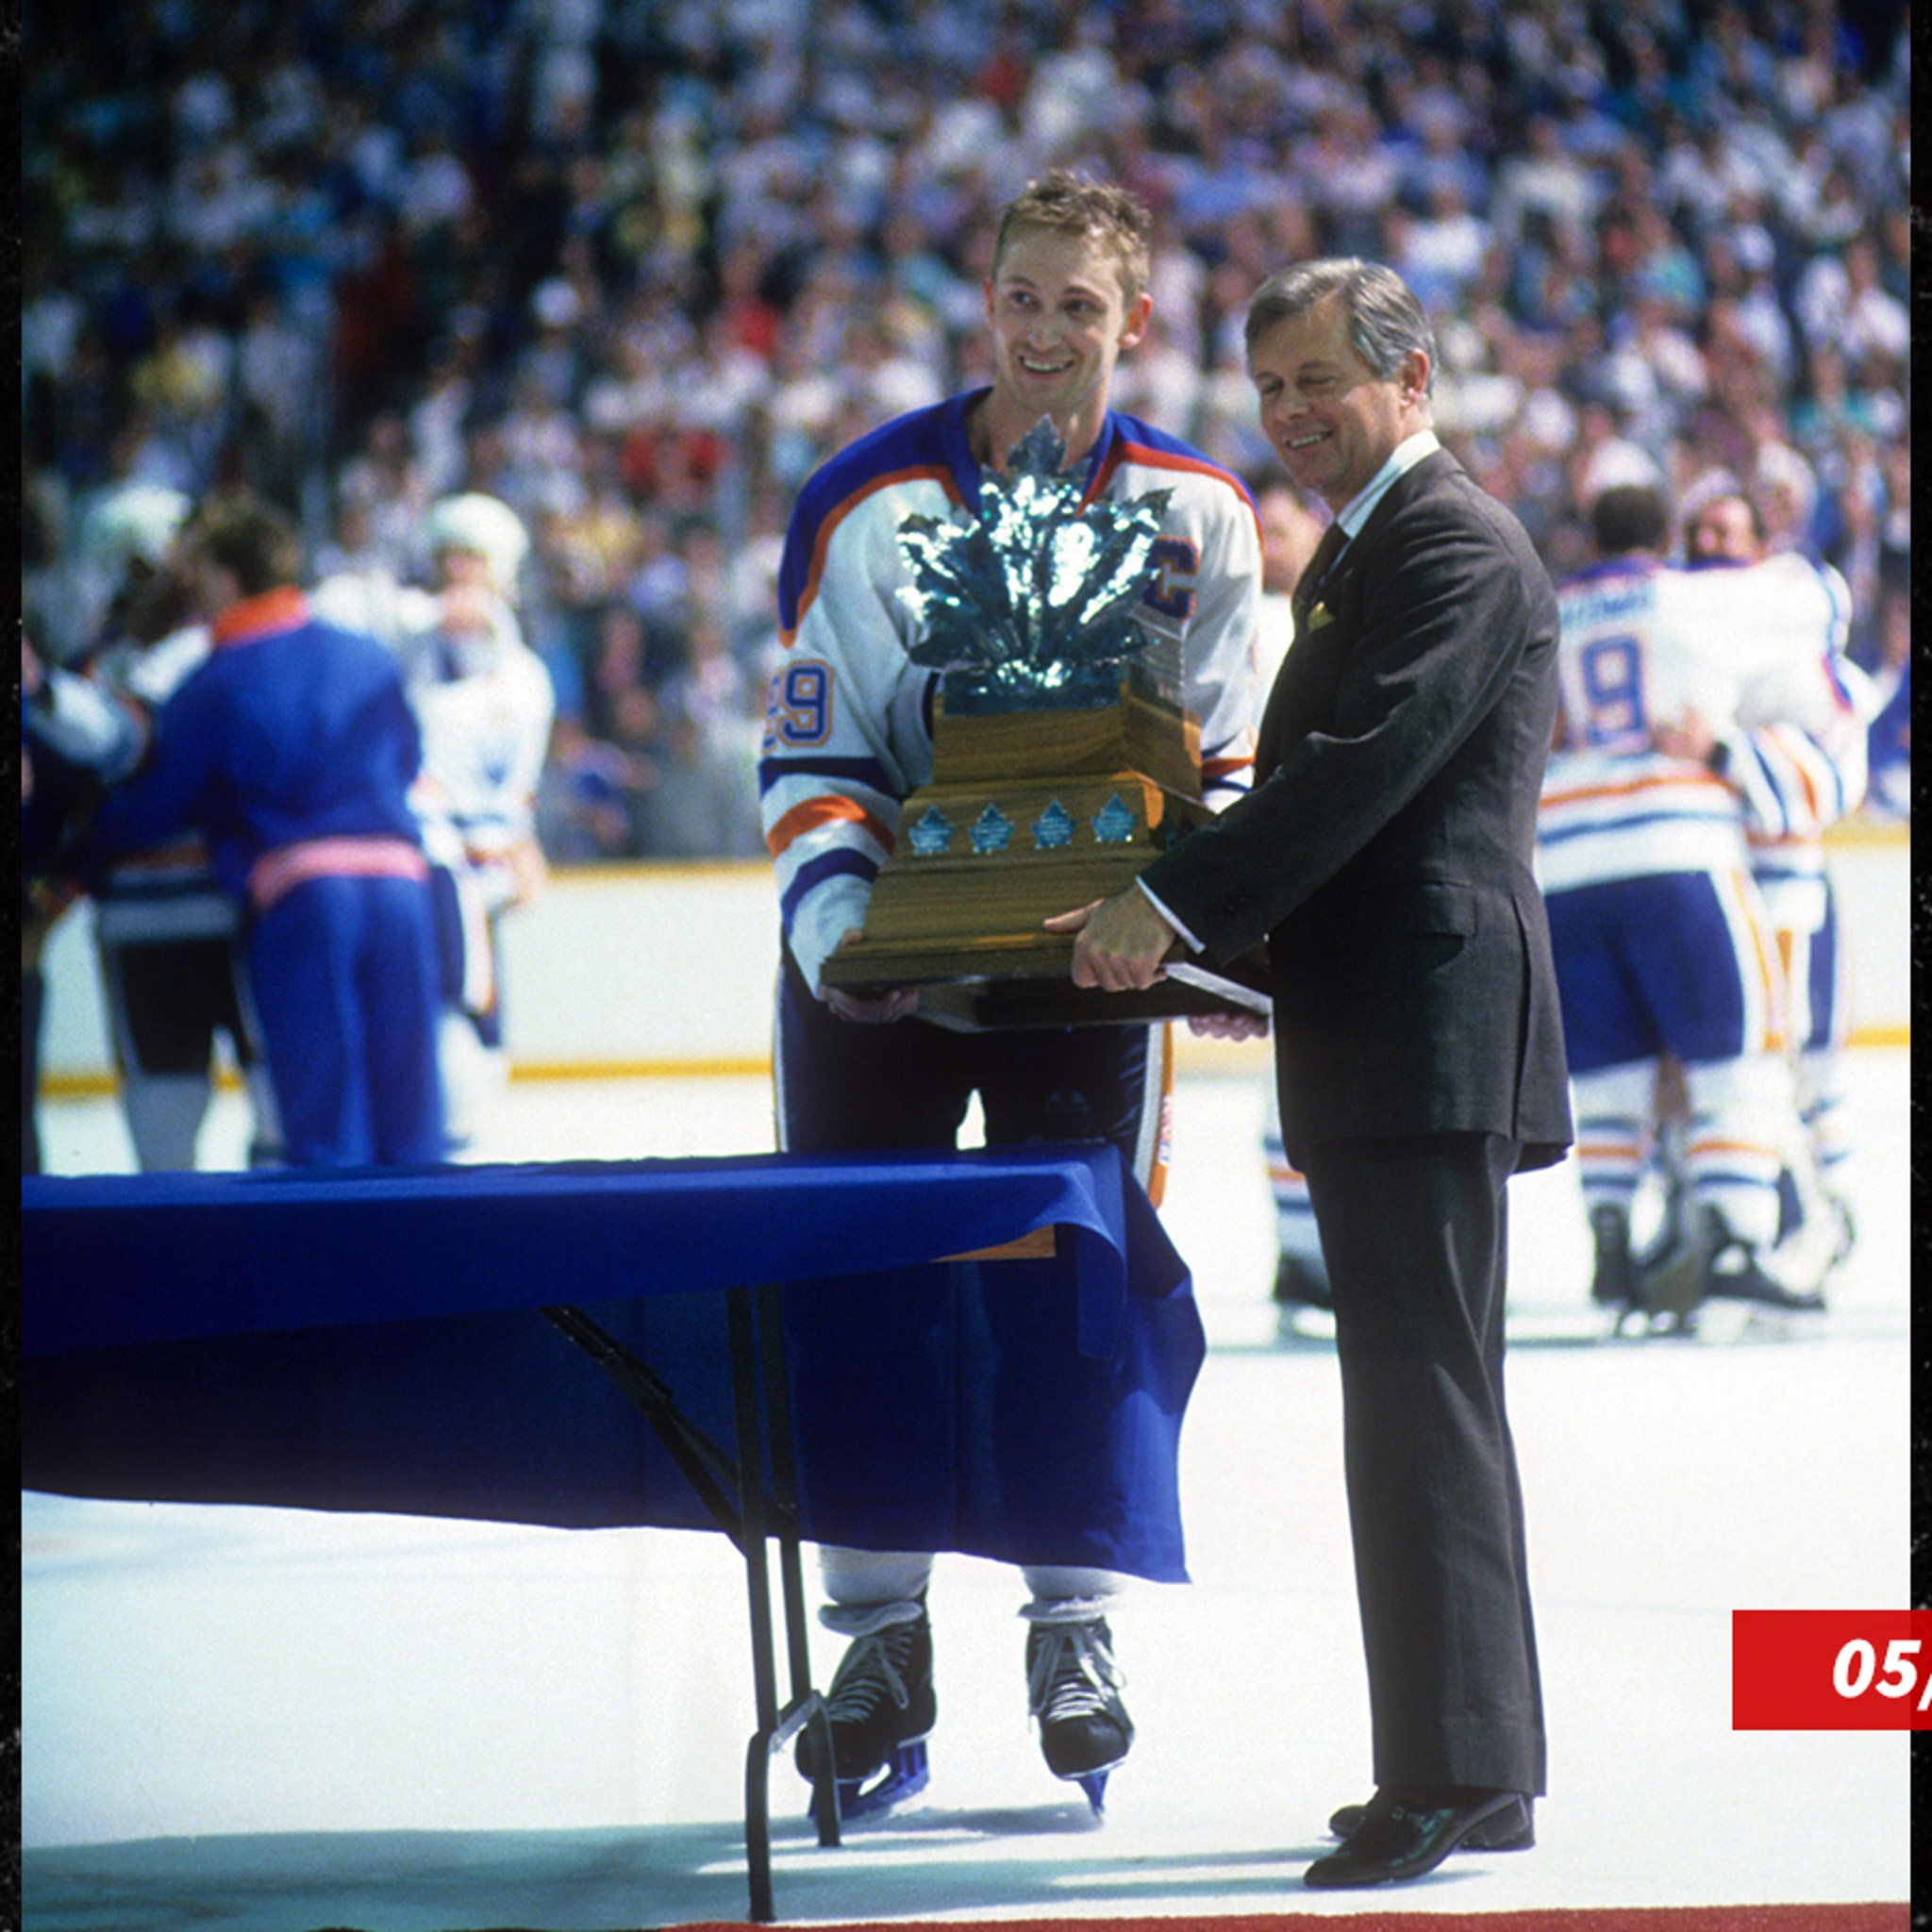 Edmonton Oilers jersey #99 Gretzky